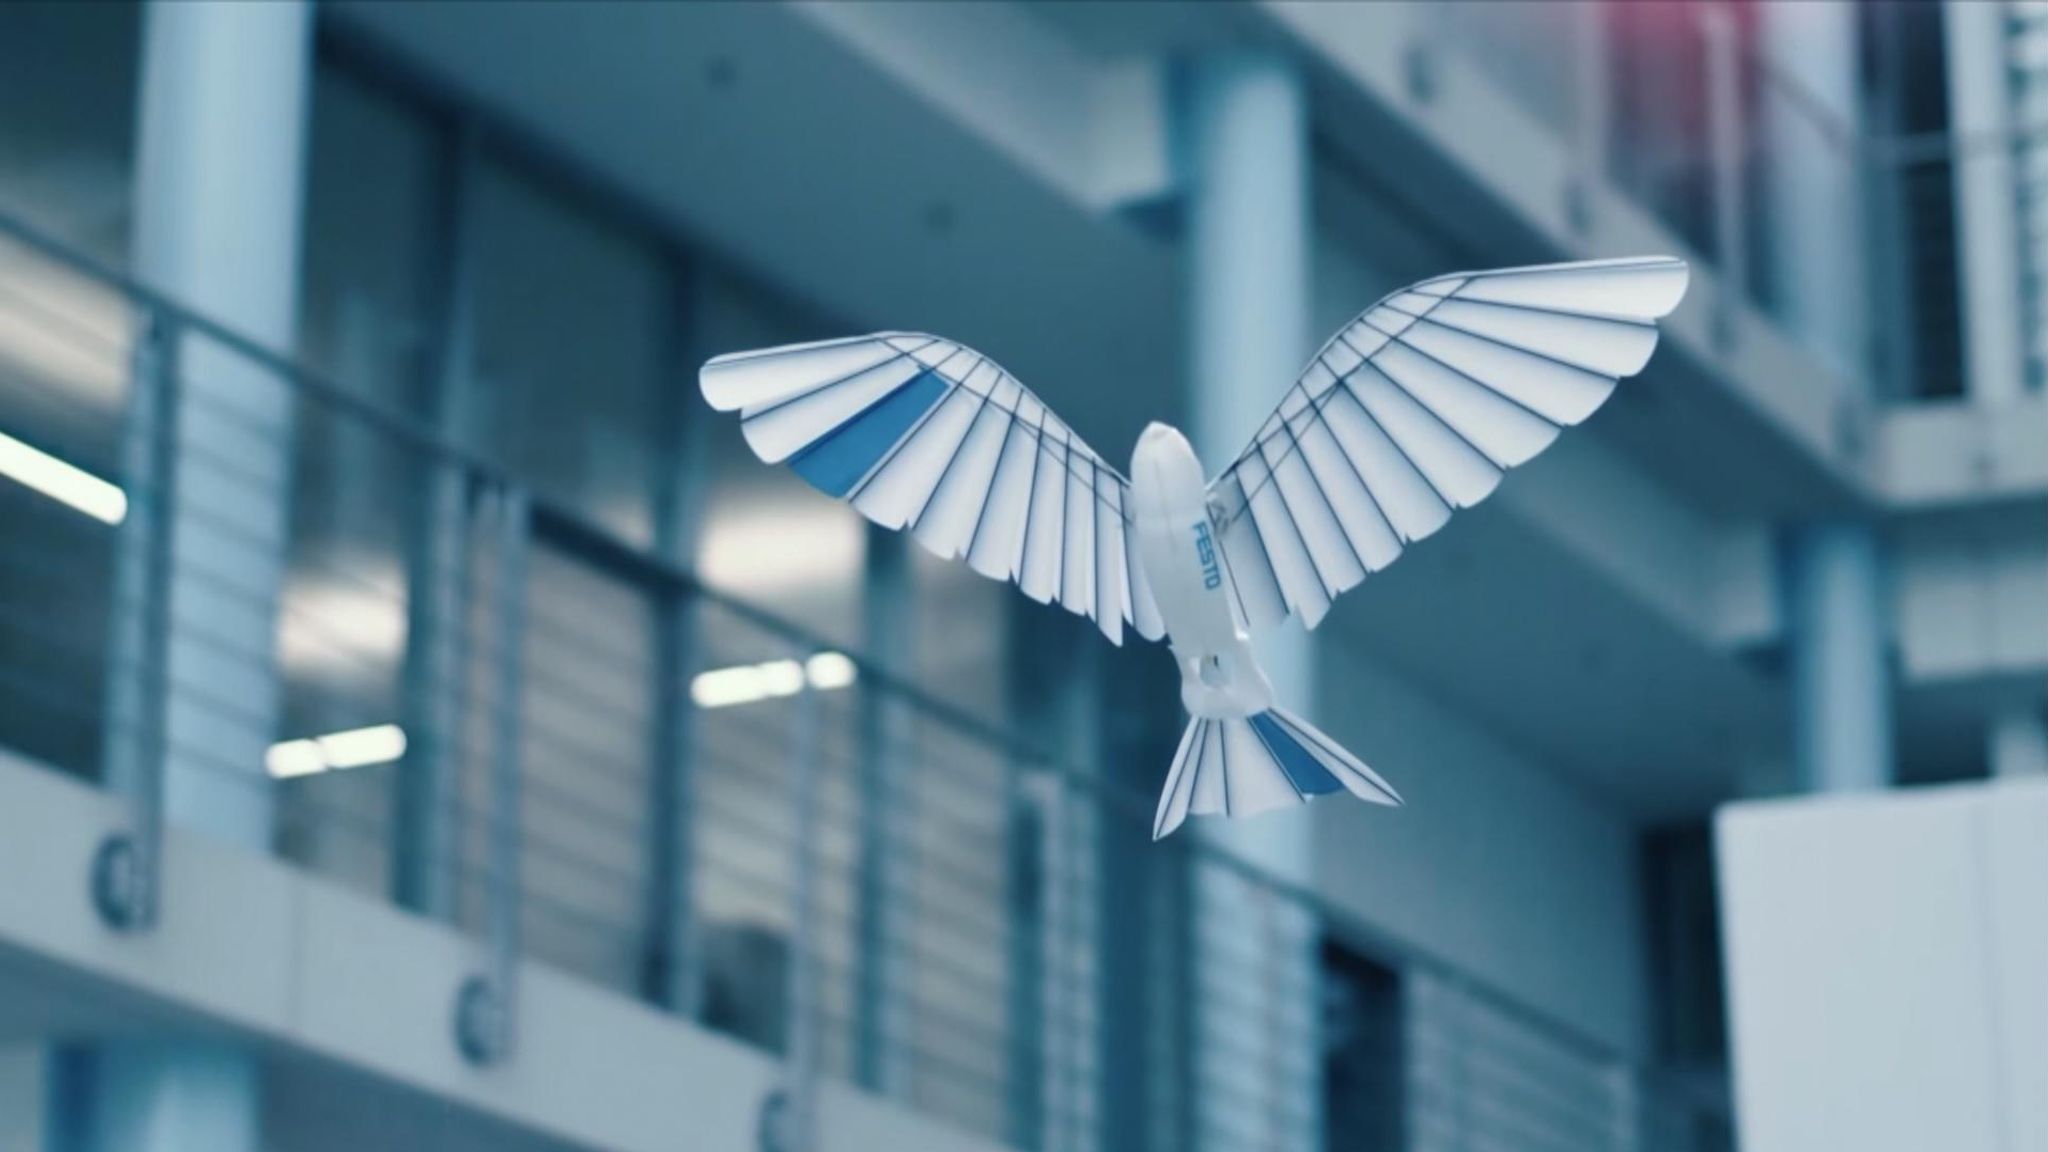 Robotic birds capable amazingly realistic flight by German company | Science & Tech News | Sky News